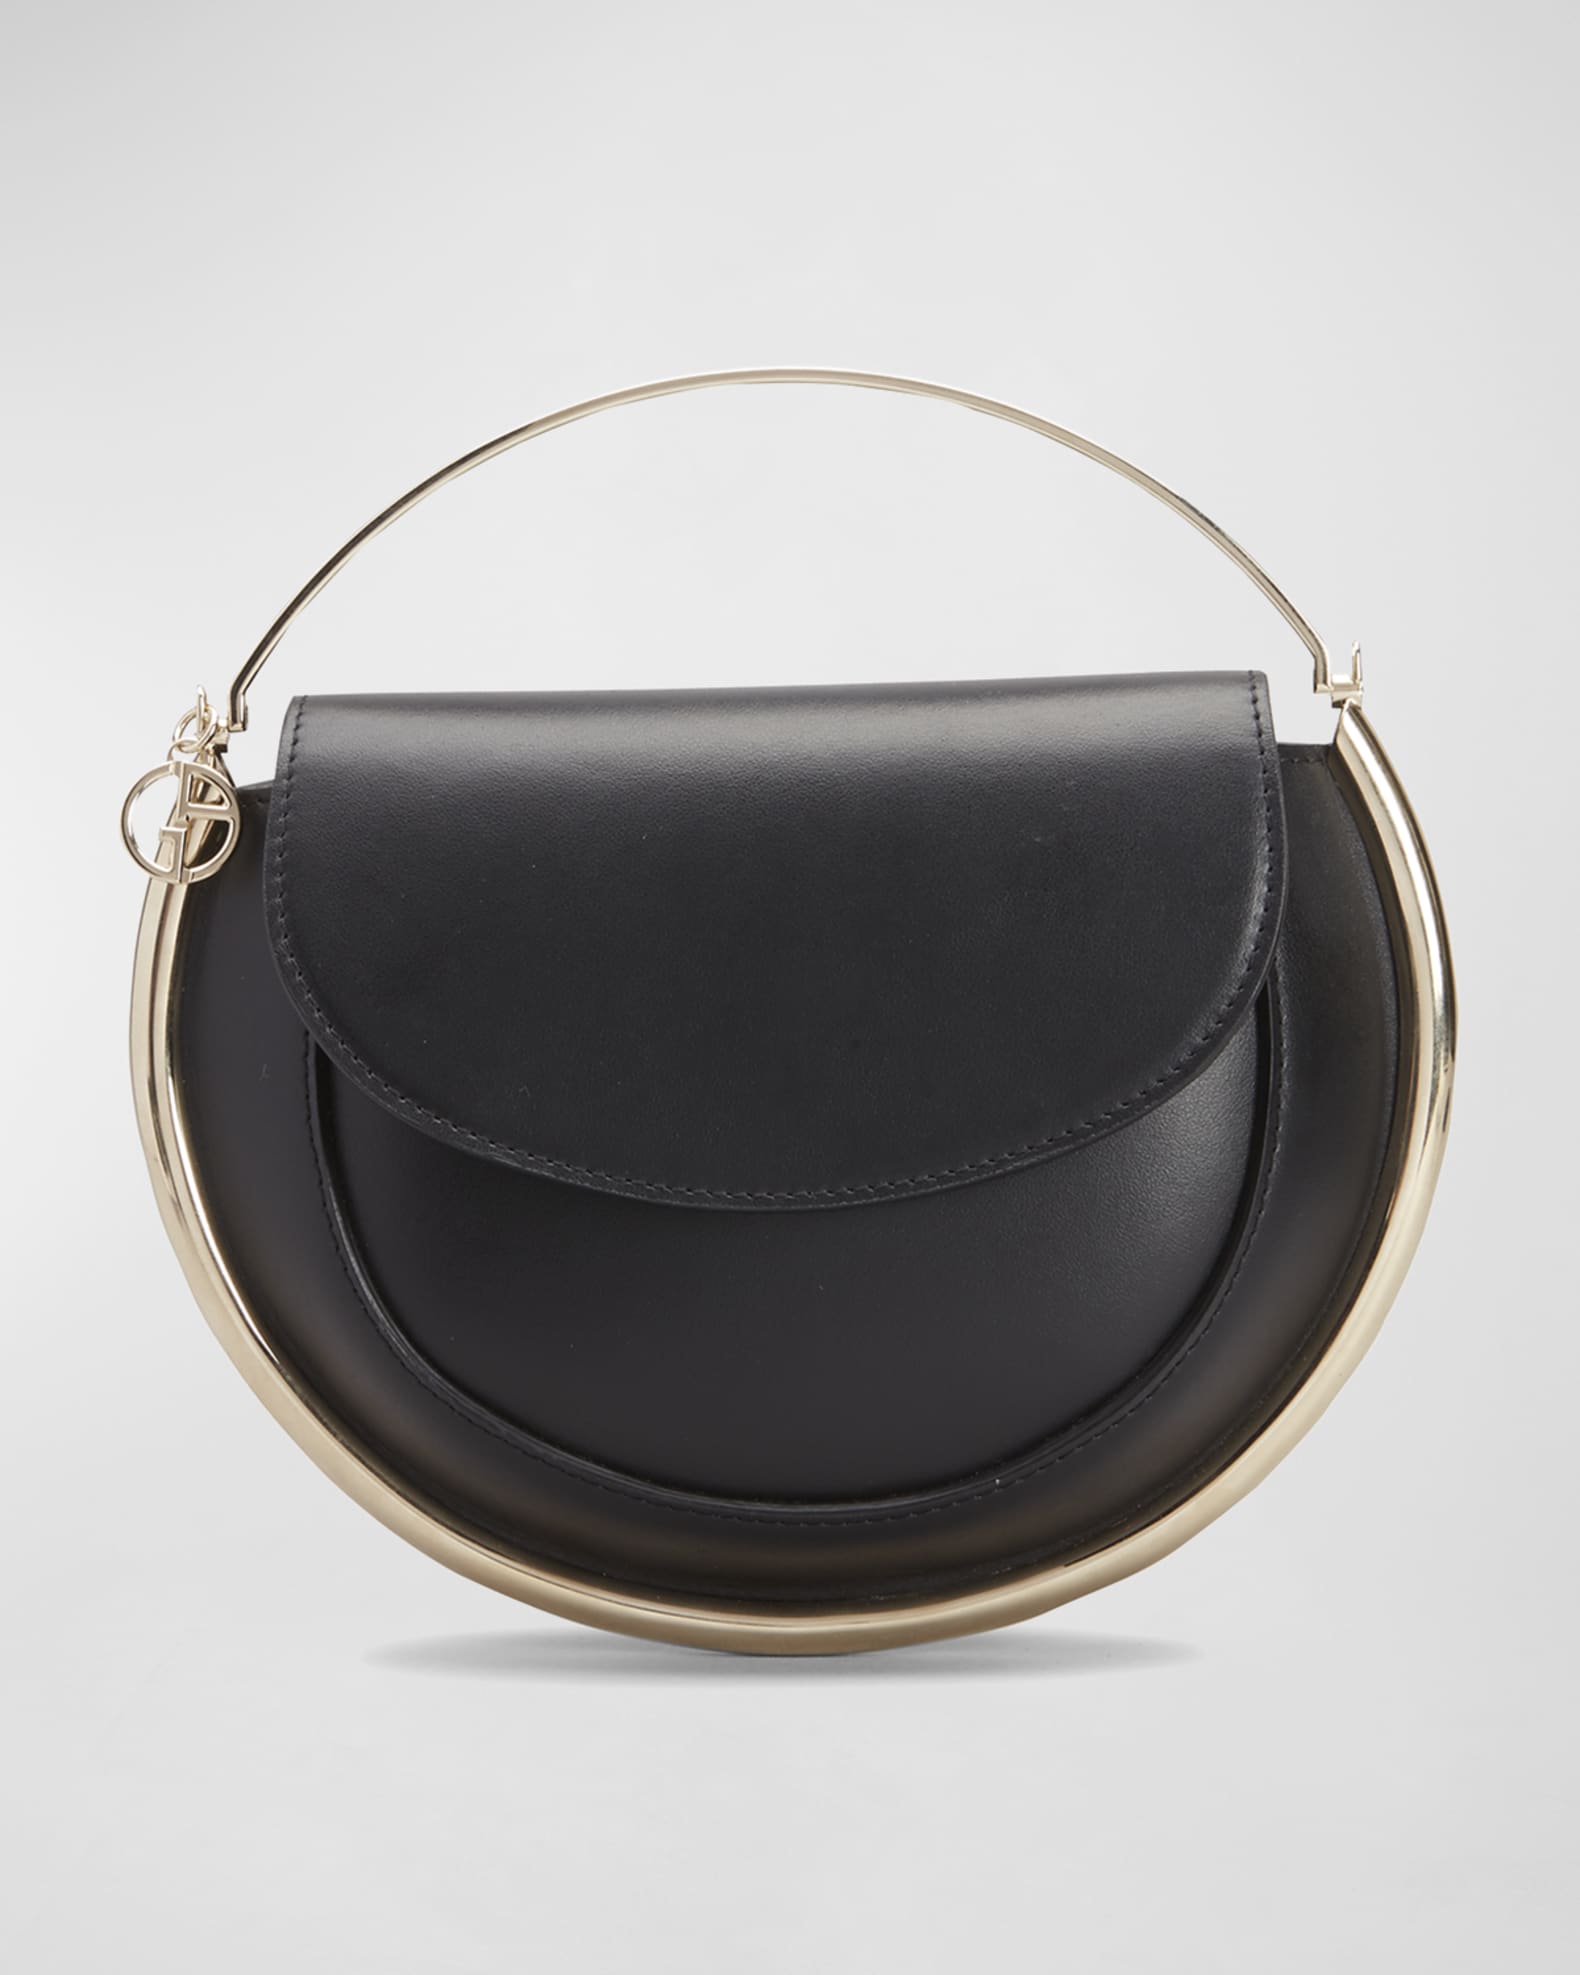 Giorgio Armani Metal Frame Leather Flap Clutch Bag Black